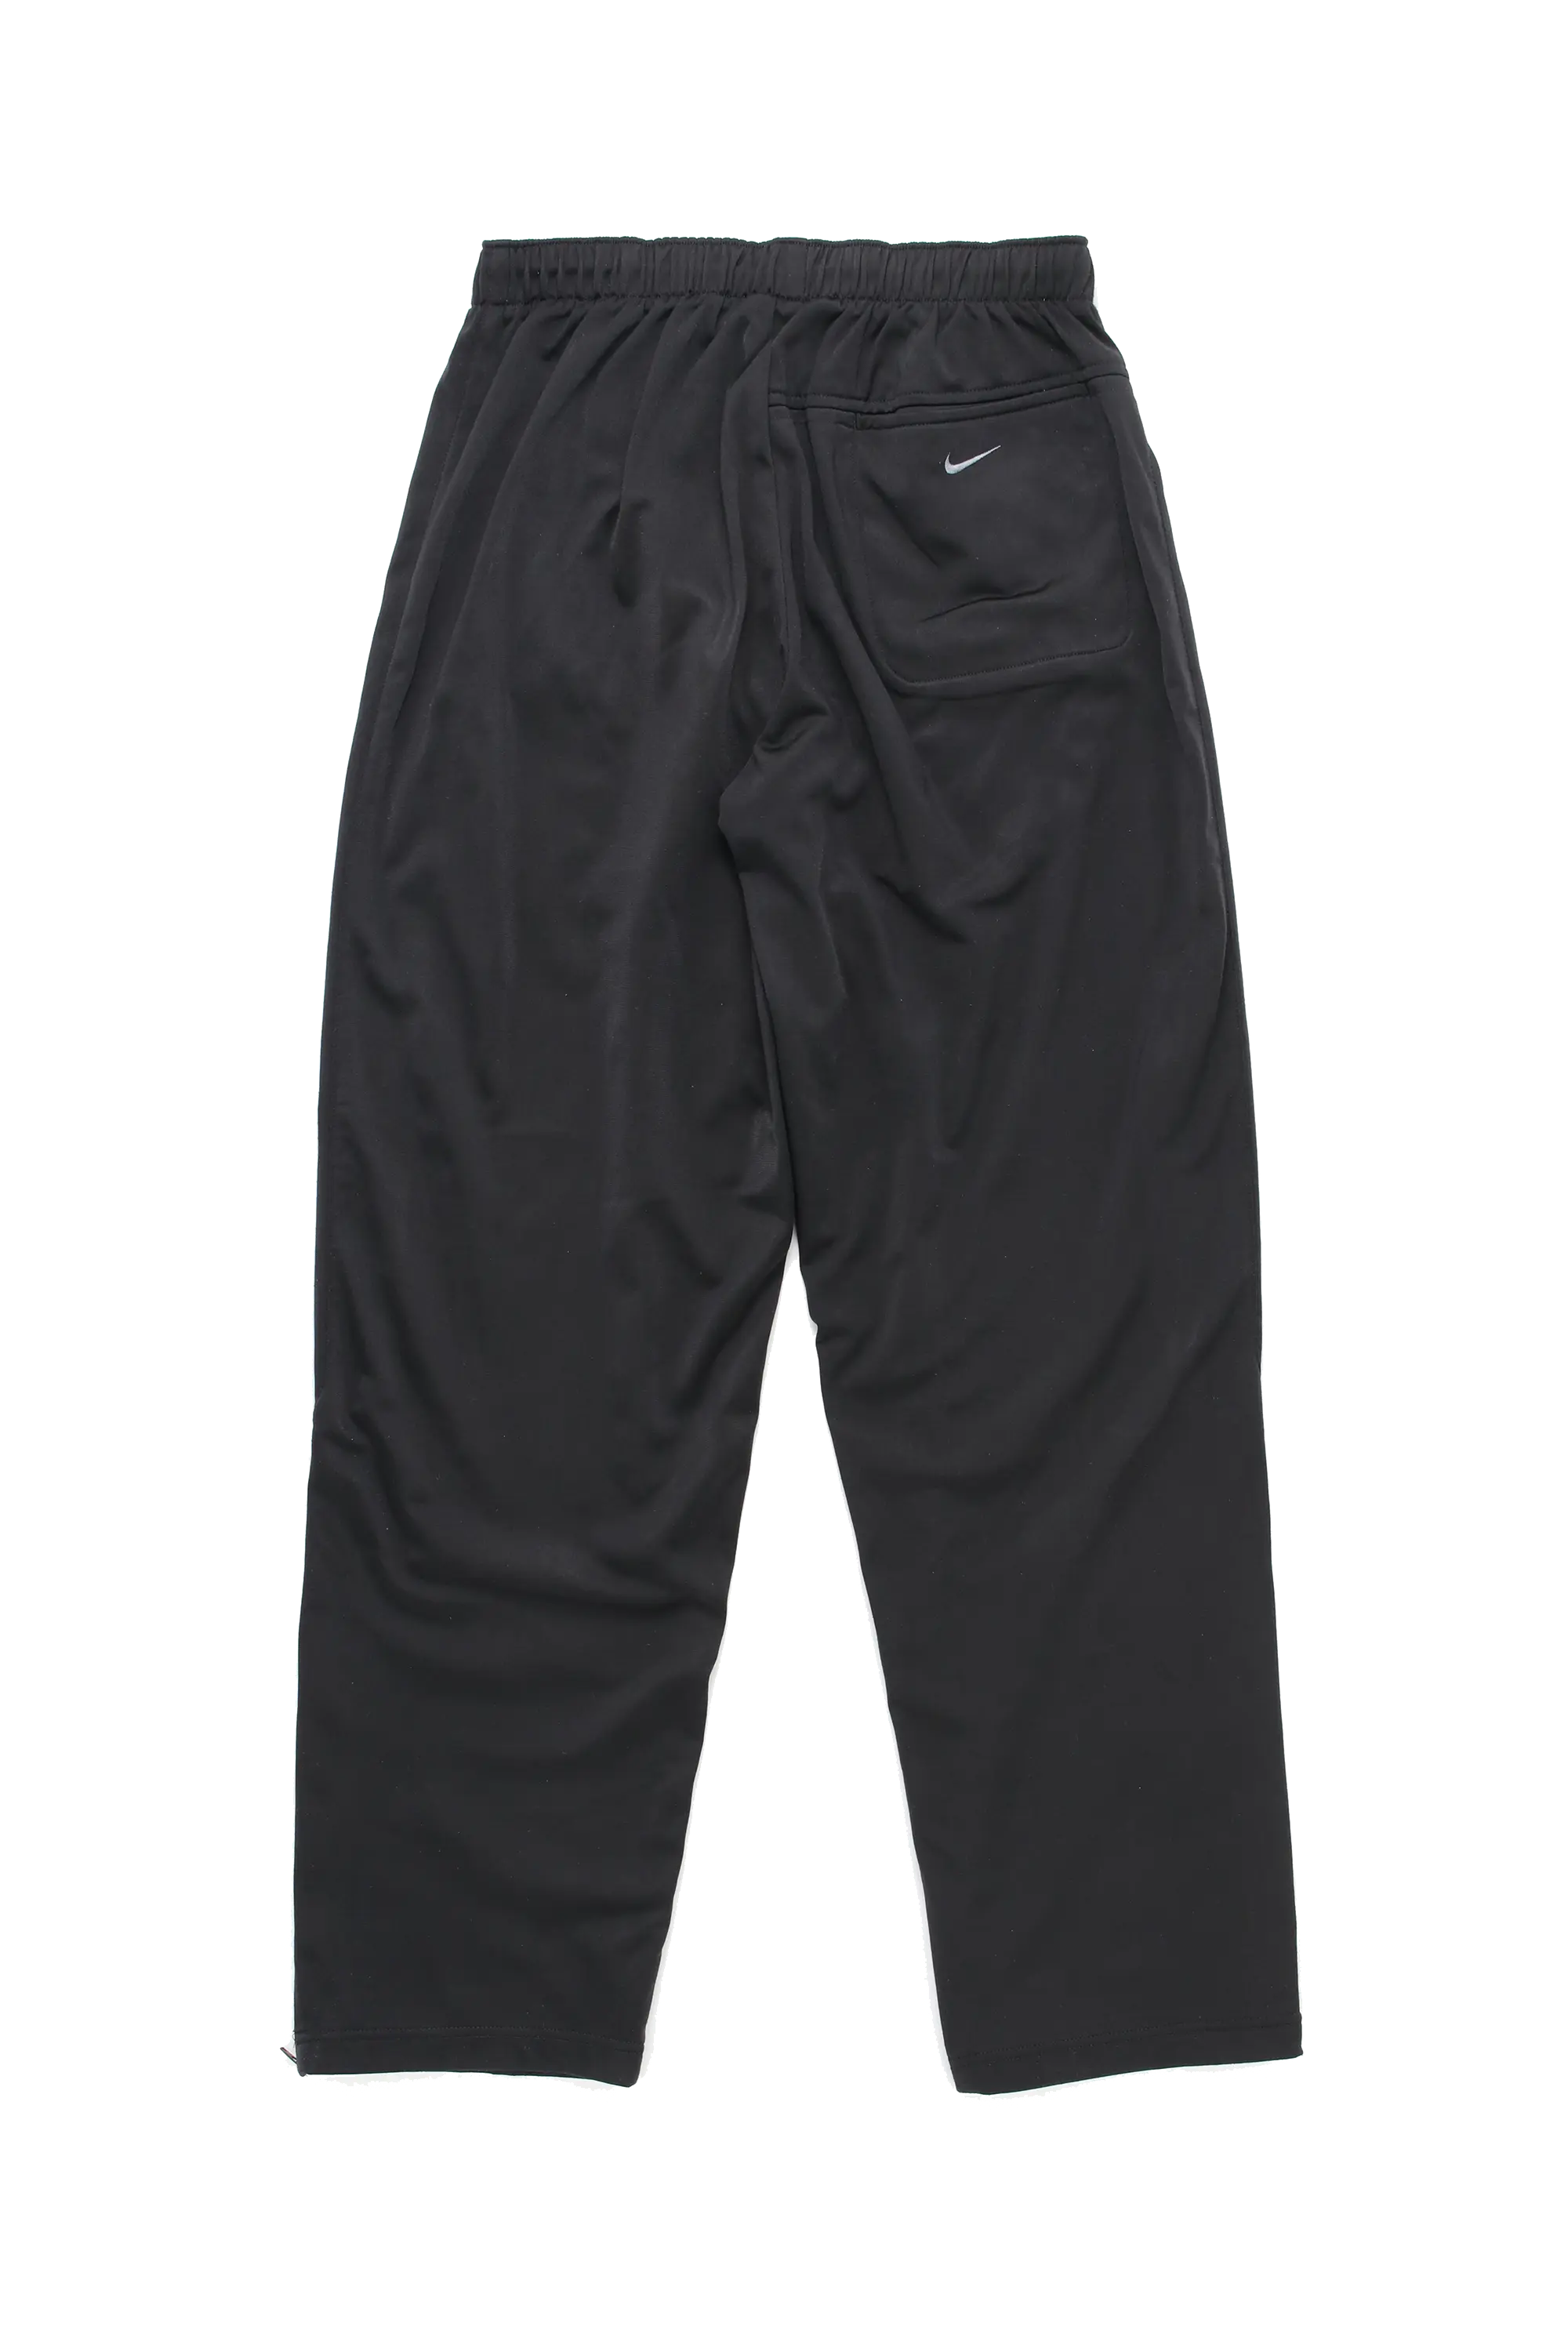 Nike Silver Swoosh Trackpants